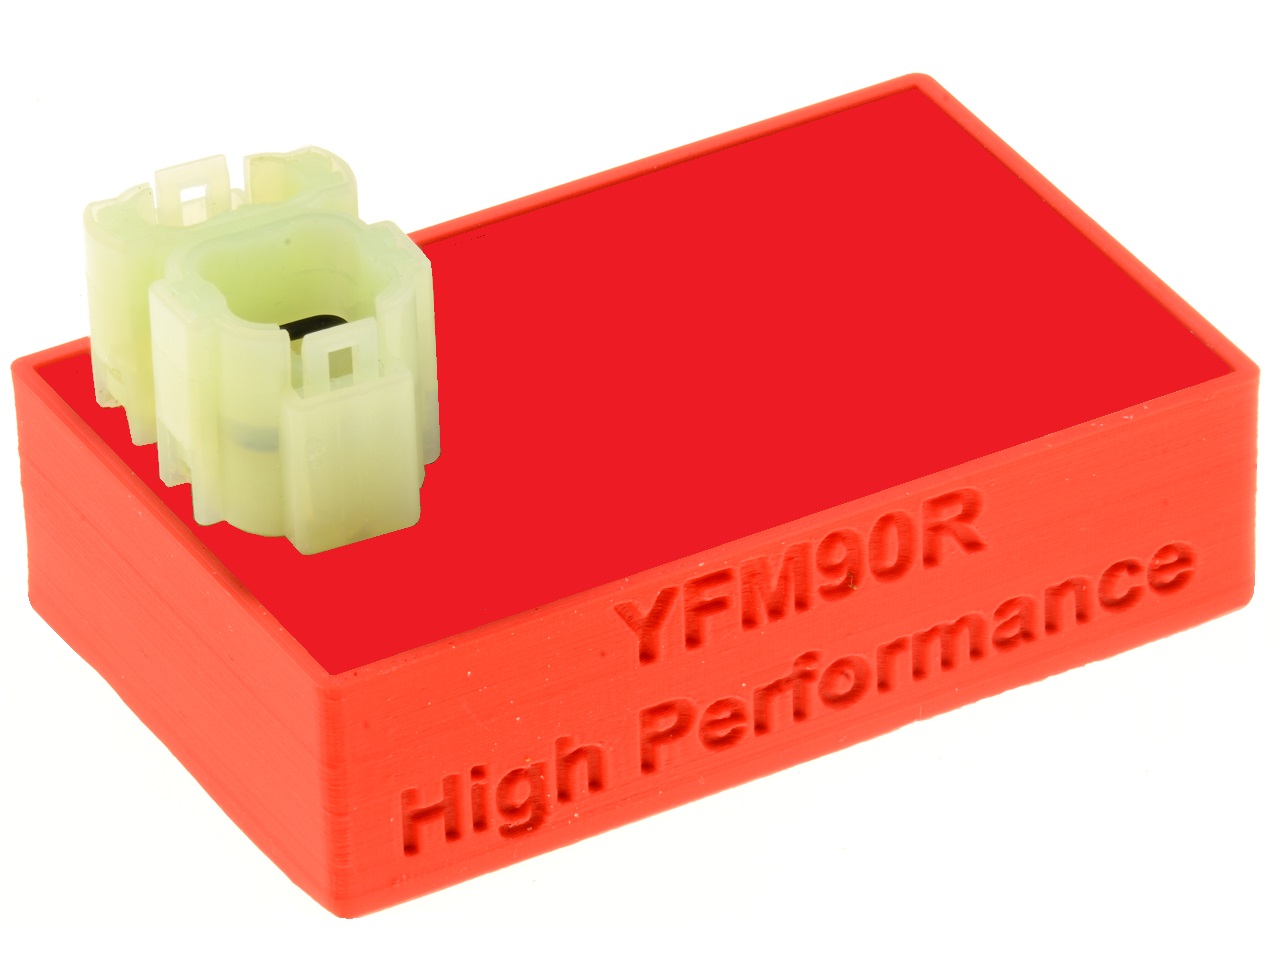 Improved Yamaha YFM90R CDI TCI box brain more power no rev limiter - Click Image to Close